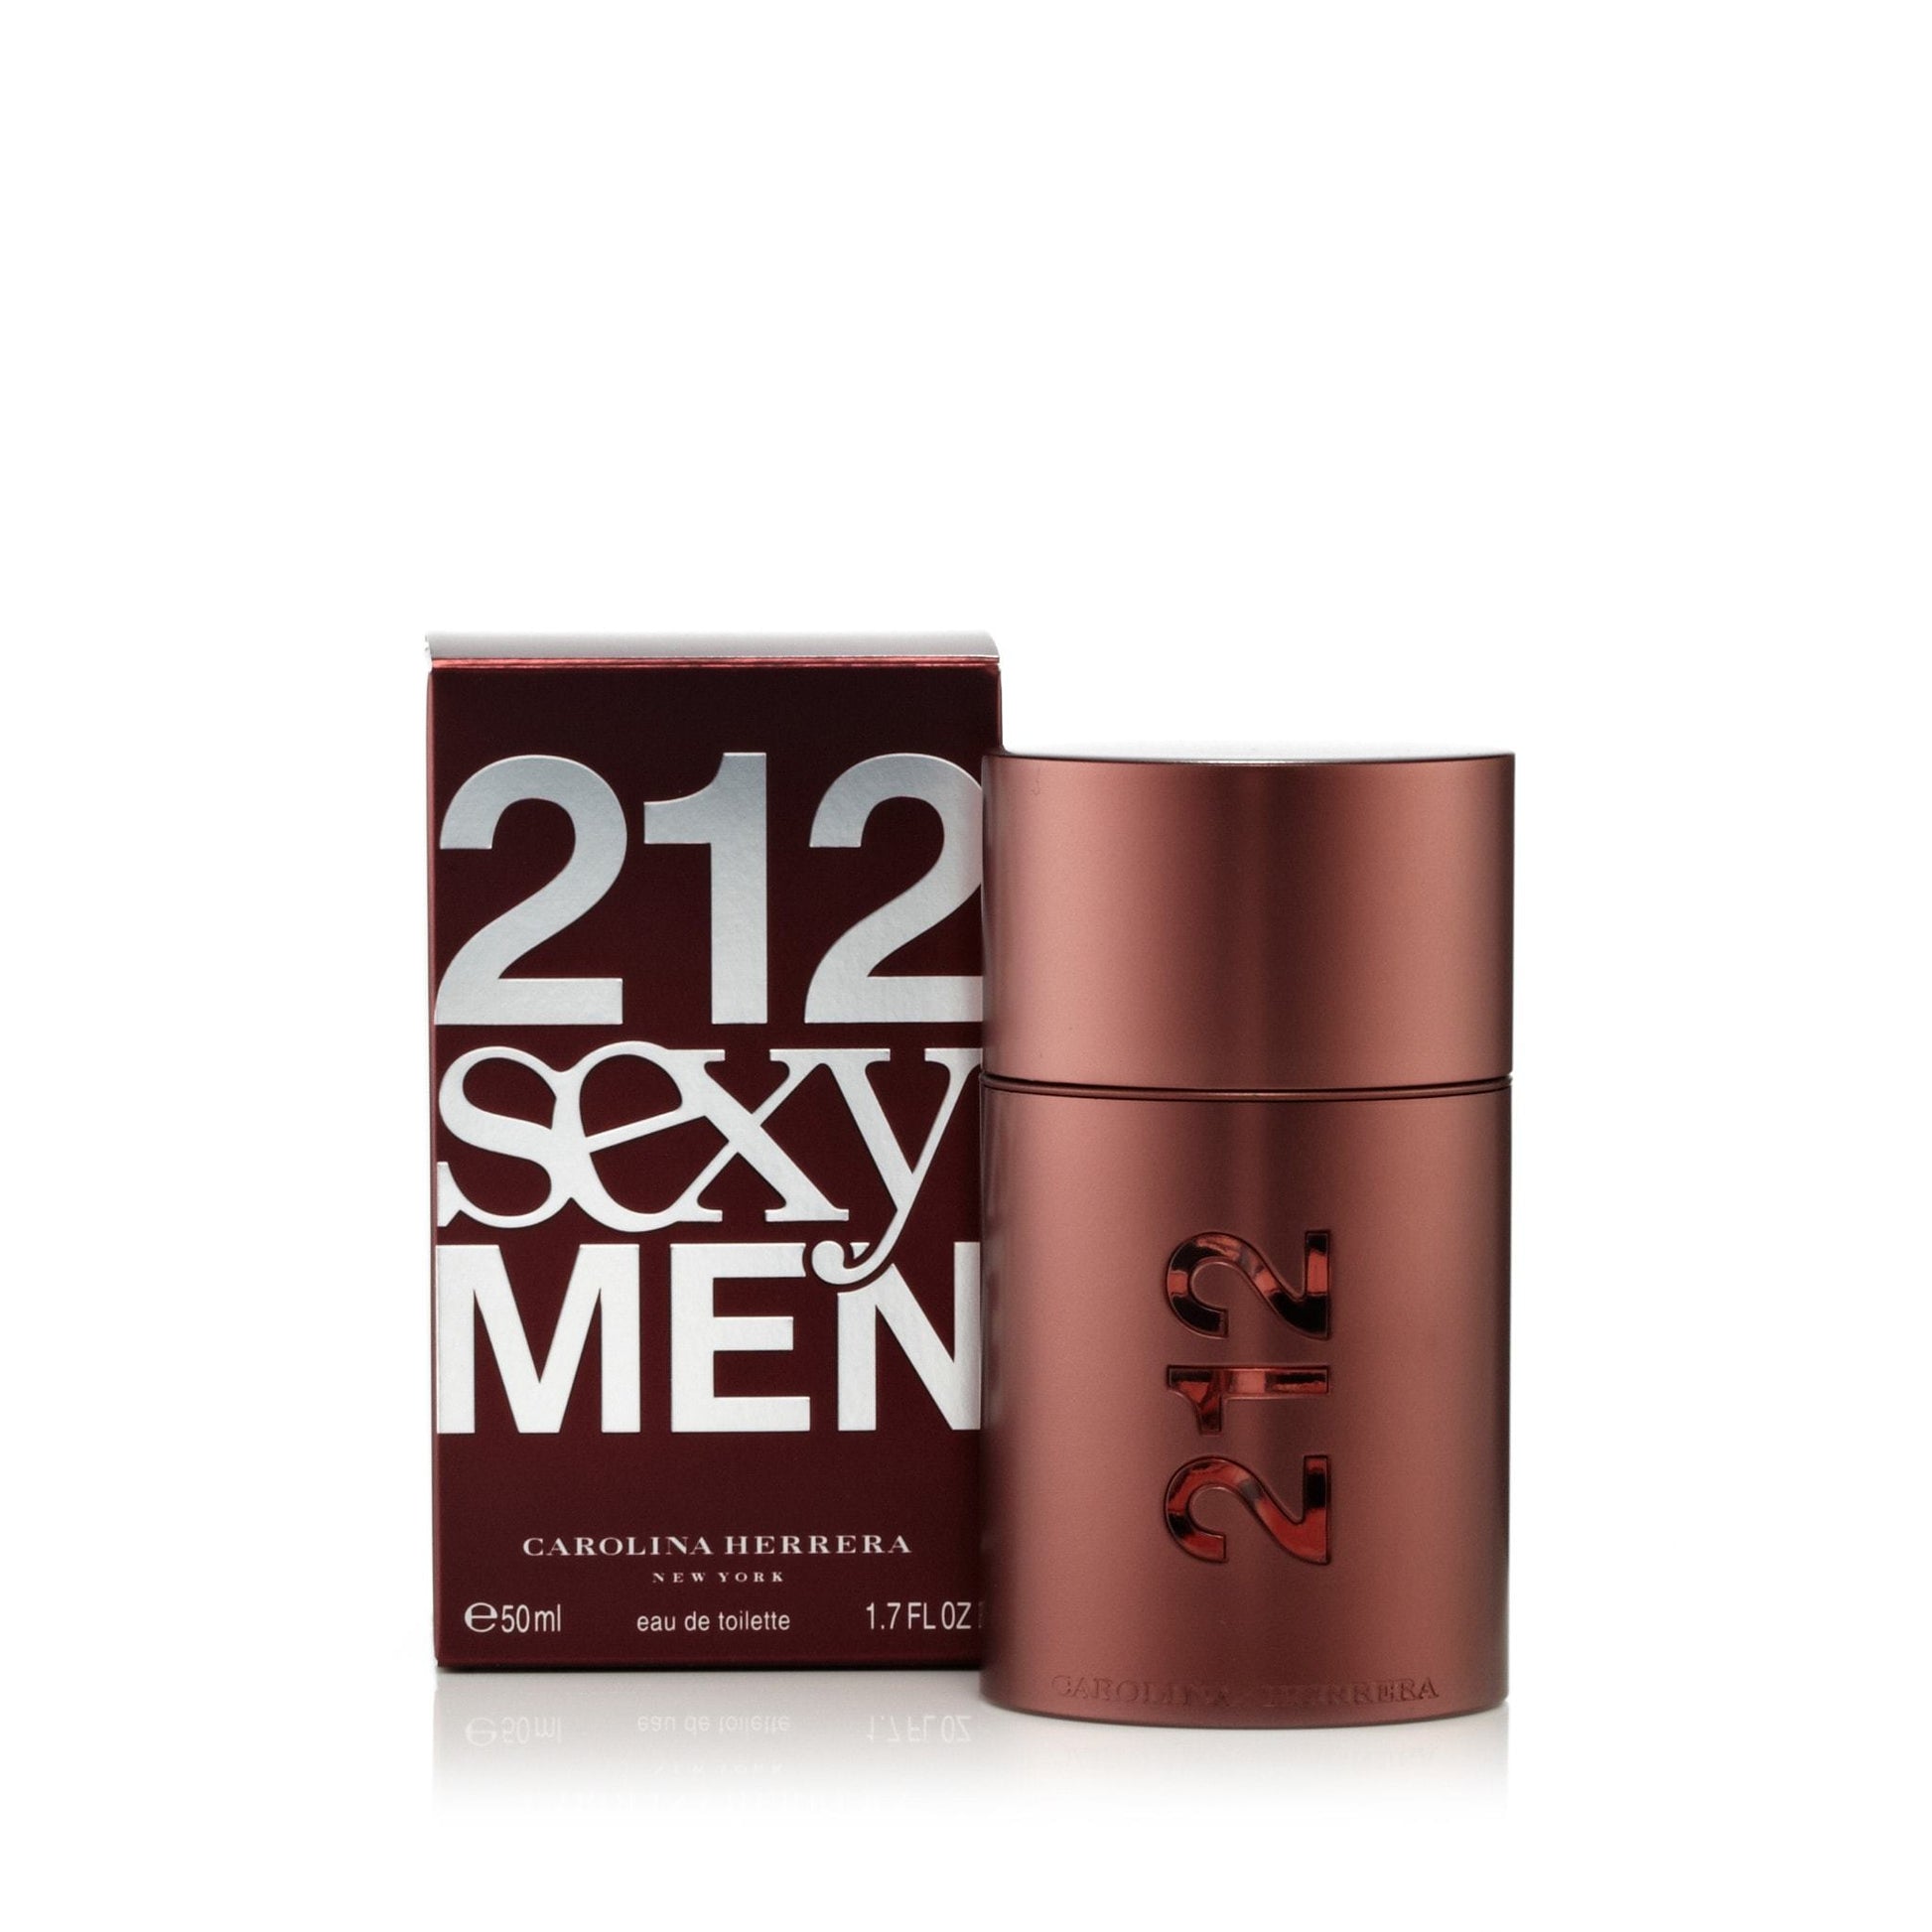 212 Sexy Men Eau de Toilette Spray for Men by Carolina Herrera, Product image 4